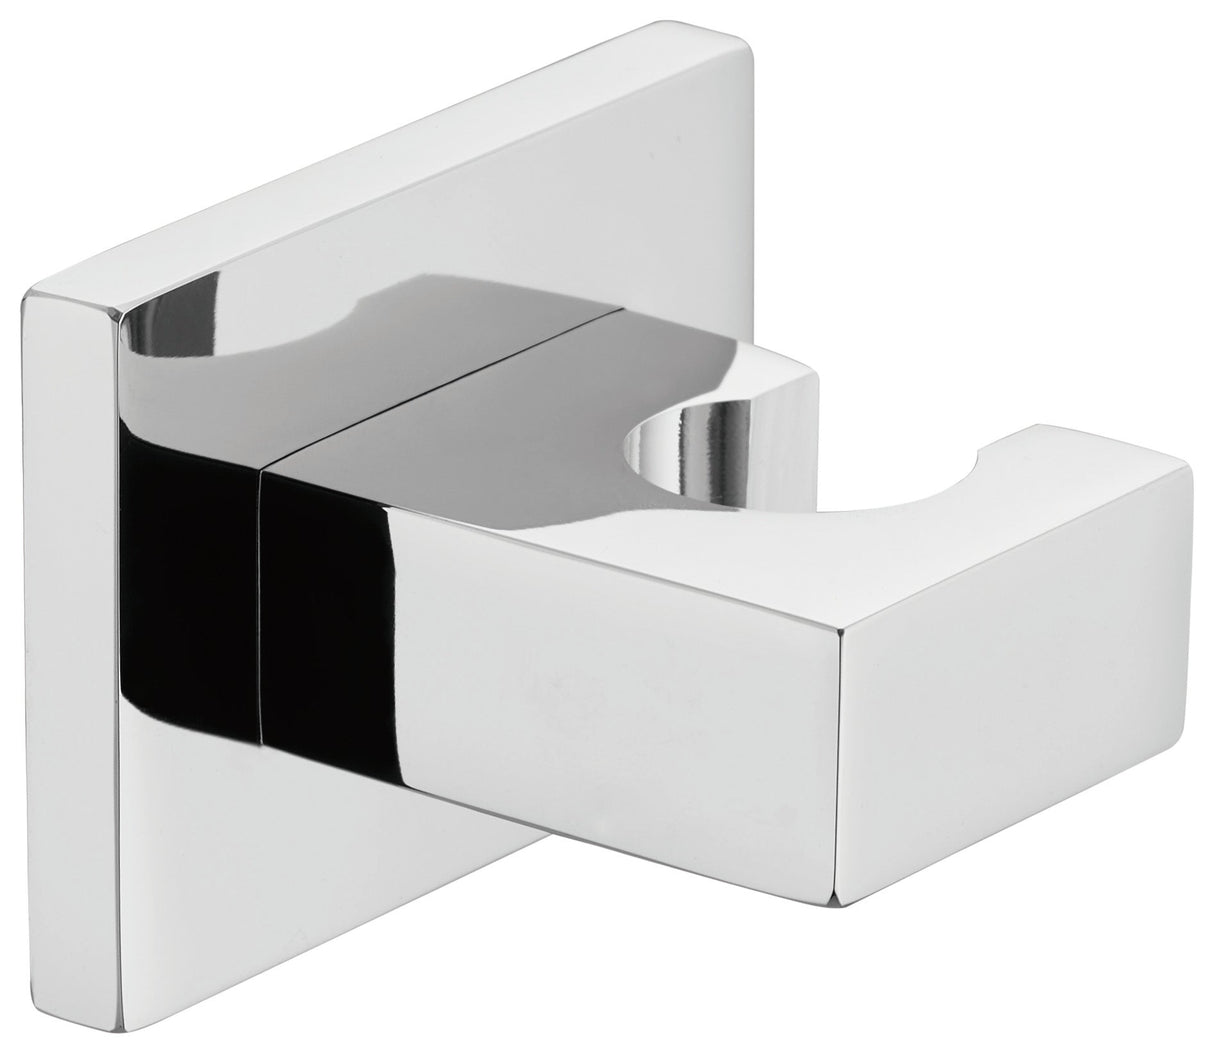 DAX Brass Square Shower Holder, Chrome DAX-080-CR